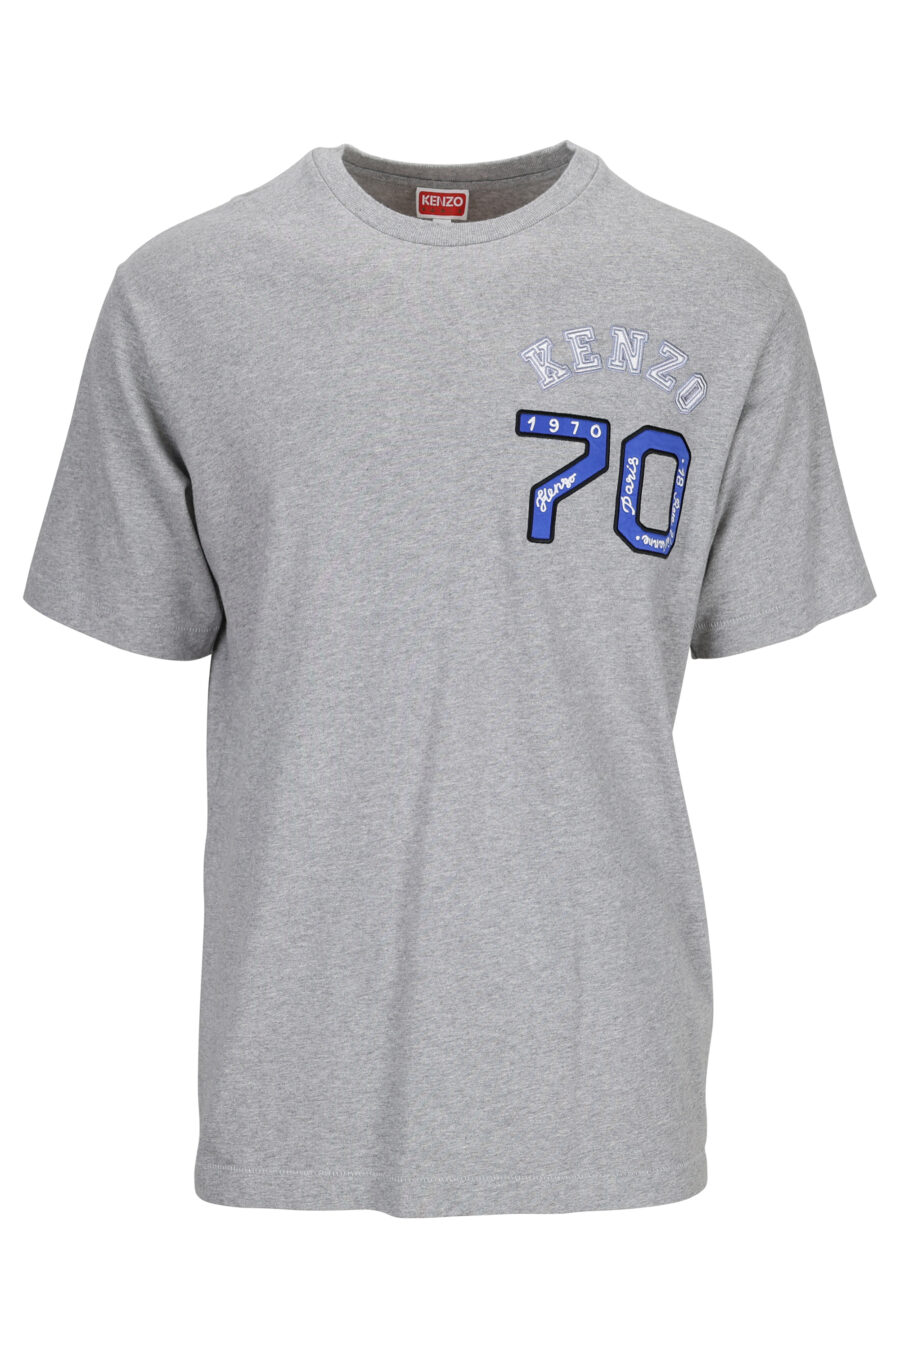 Graues T-Shirt mit "kenzo academy" Logo - 3612230545502